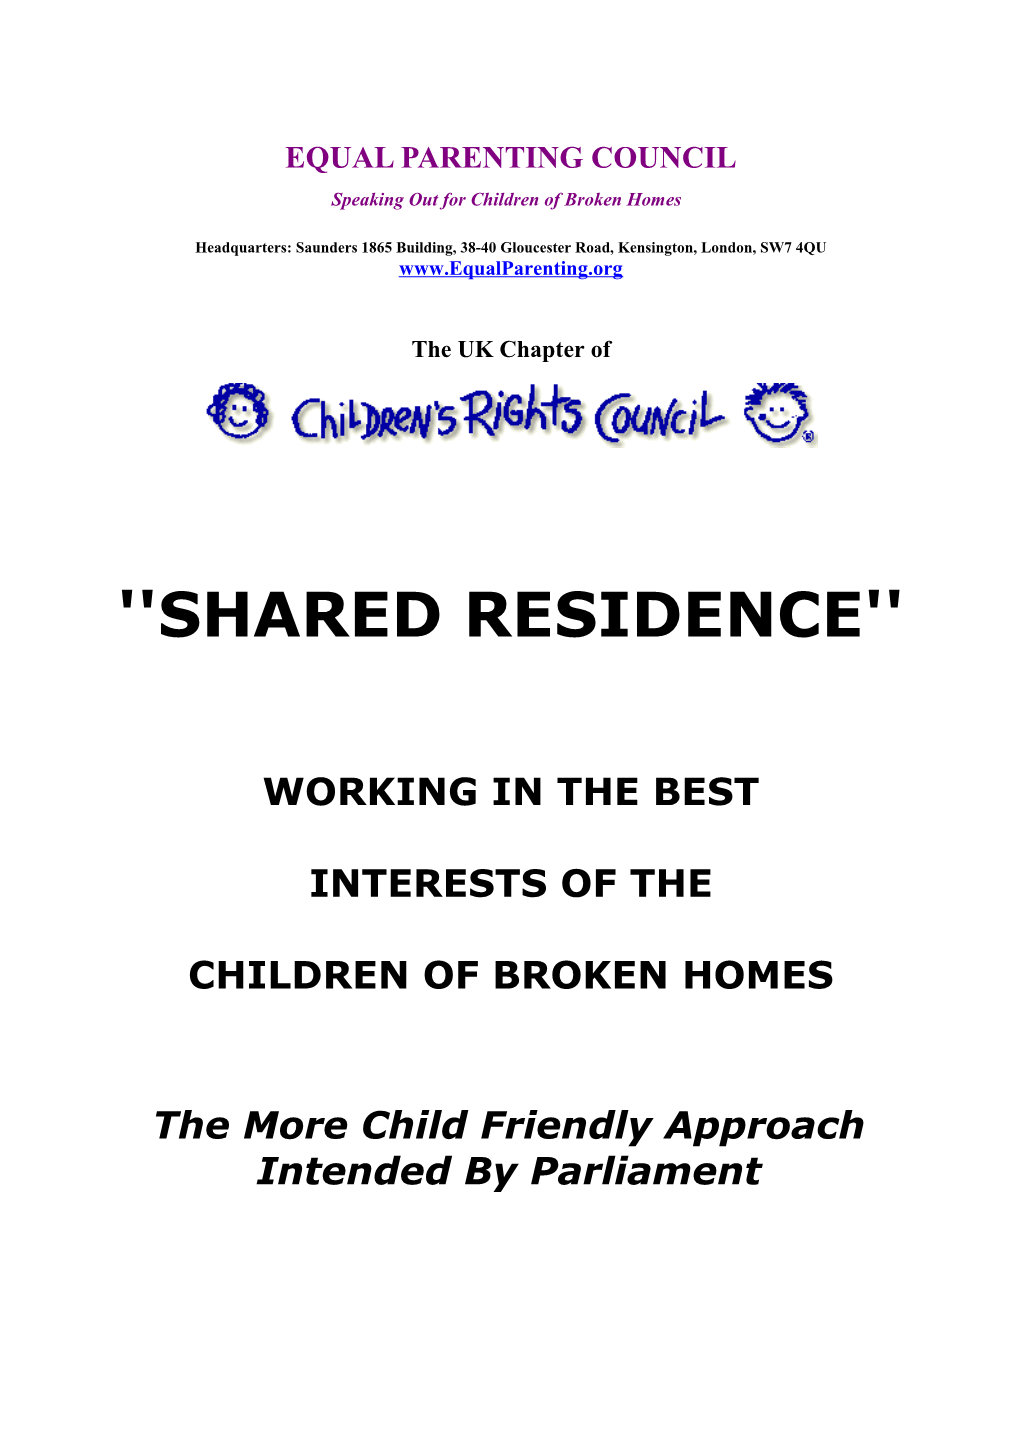 Speaking out for Children of Broken Homes